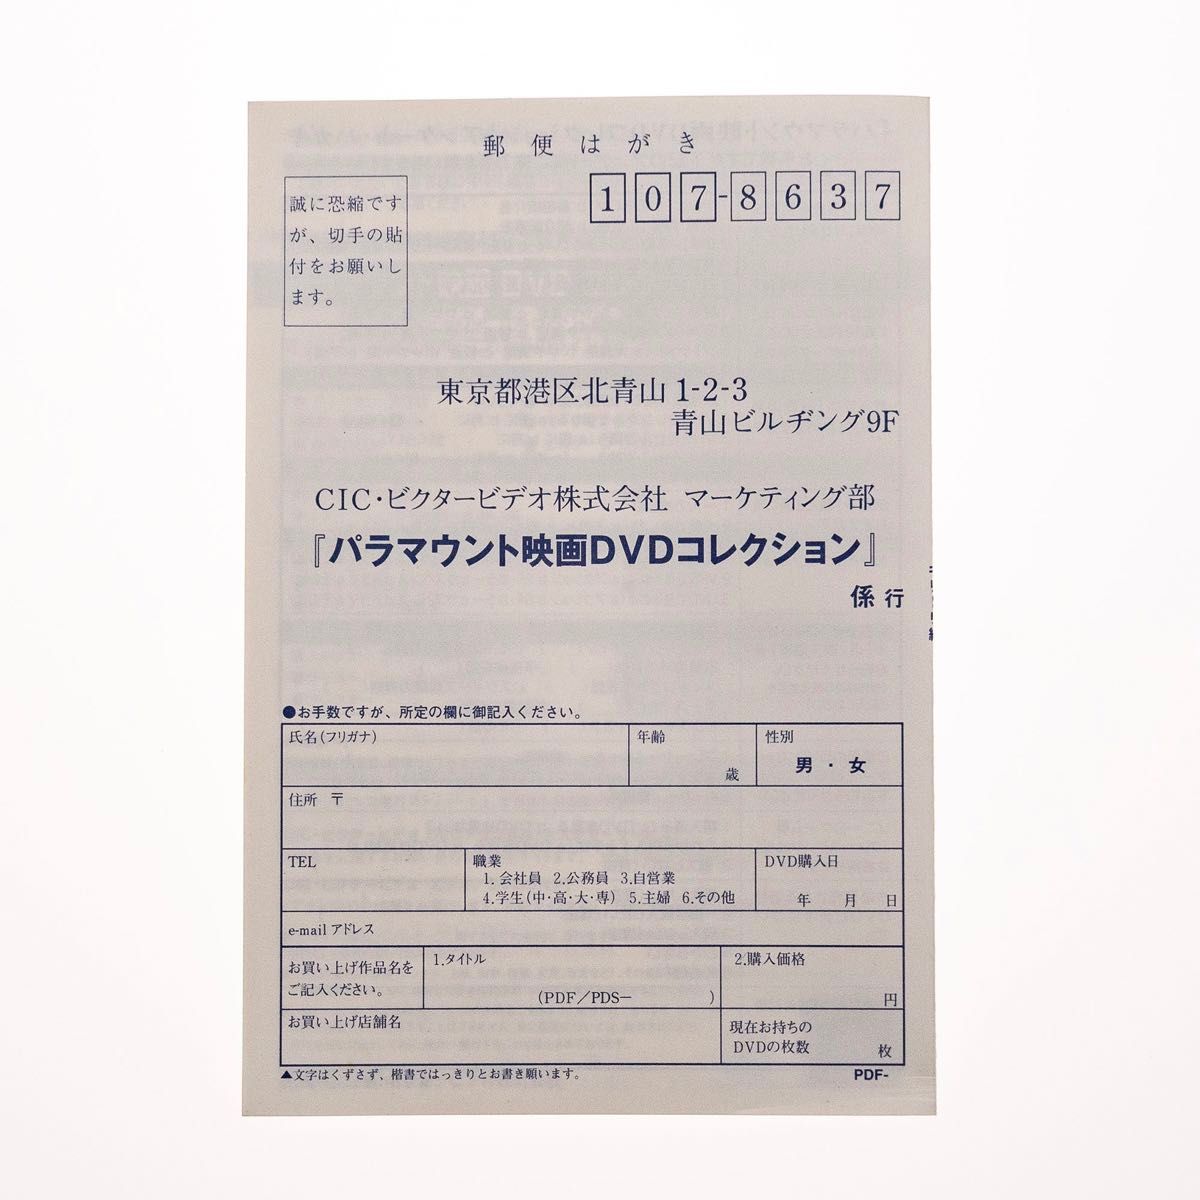 【DVD2枚組】フォレスト・ガンプ 一期一会 スペシャル・コレクターズ・エディション PDF-74